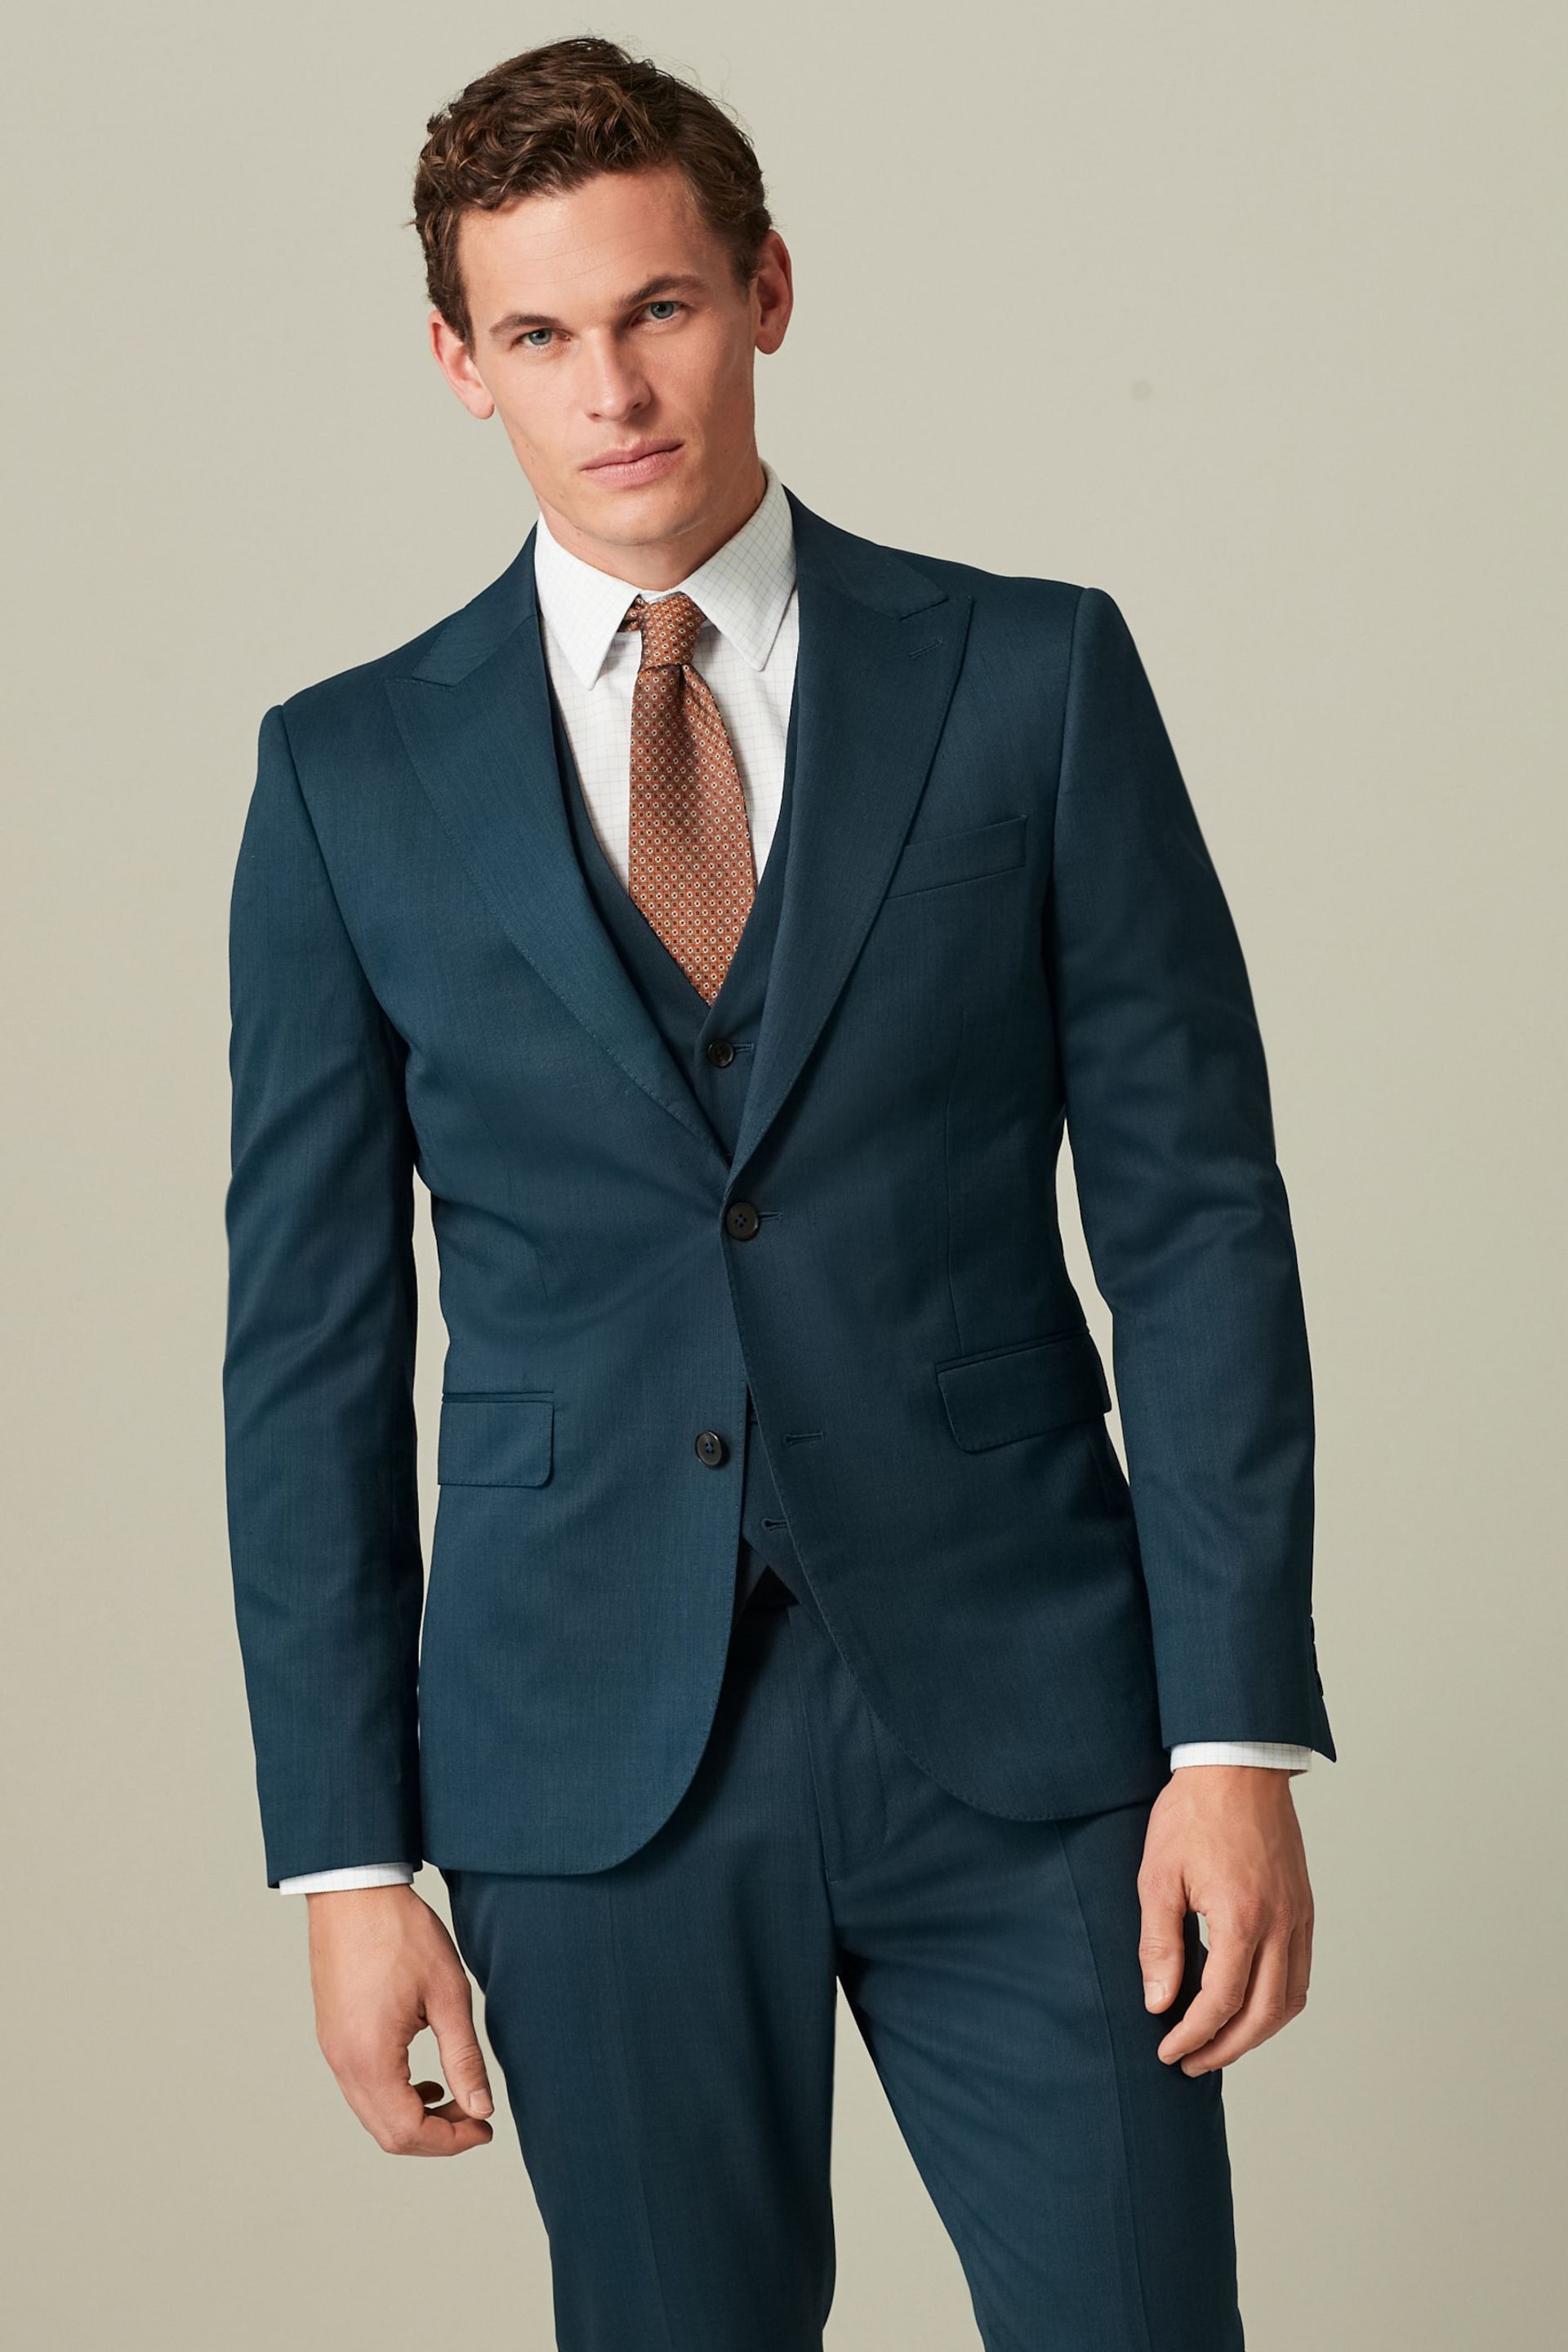 Teal Blue Slim Fit Wool Blend Suit Jacket - Image 1 of 8